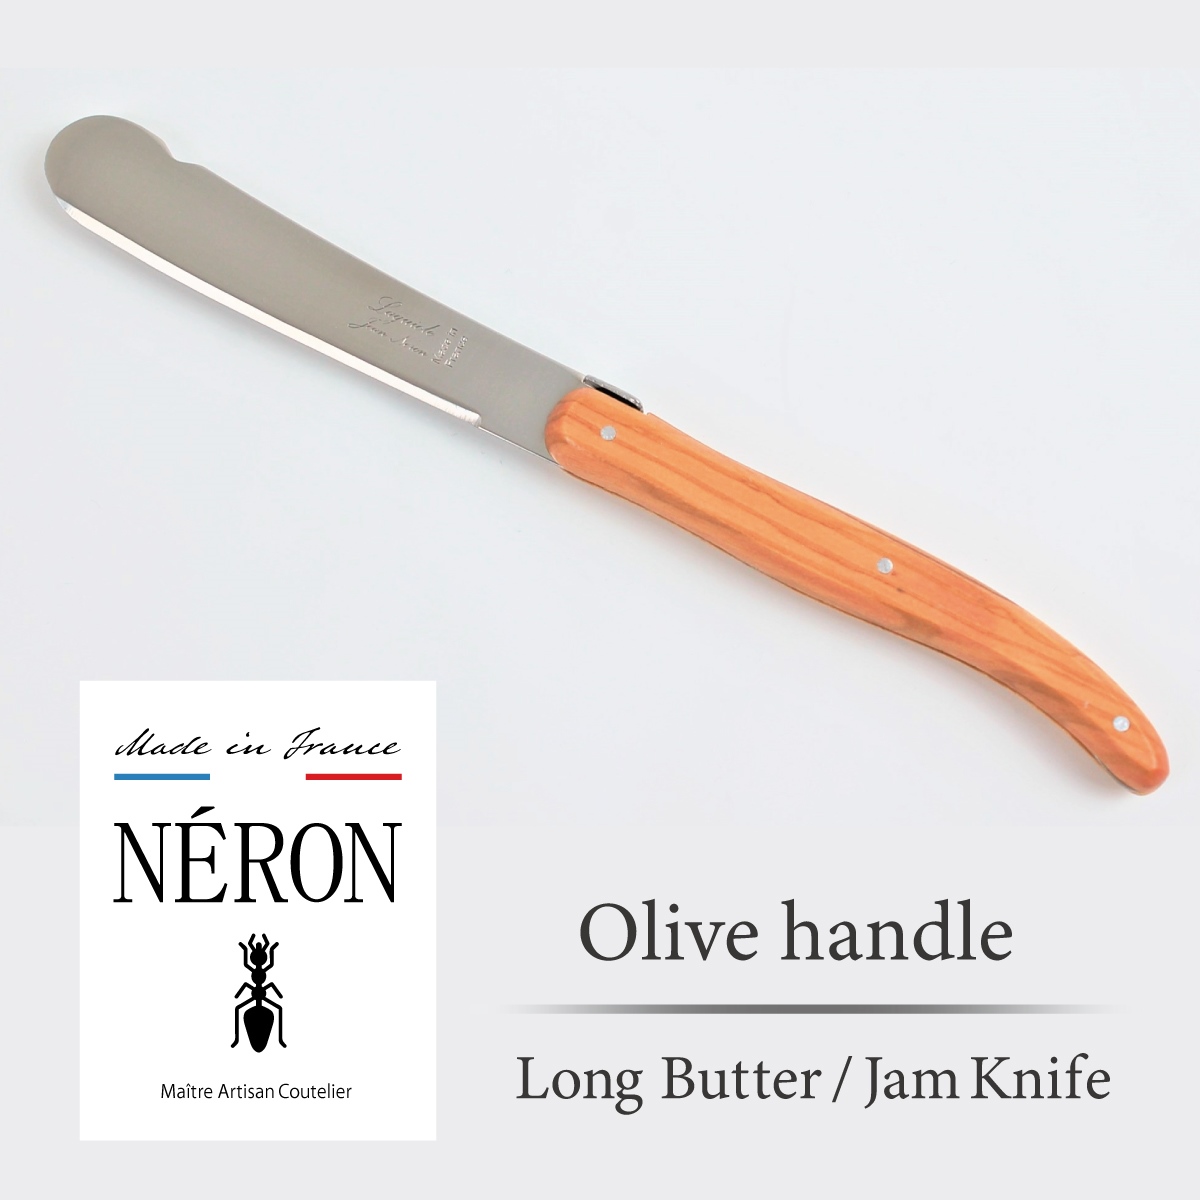 NERON ネロン Coutellerie カトラリー Long butter Jam Knife フランス製 ロング バター ジャム ナイフ 日本正規販売代理店